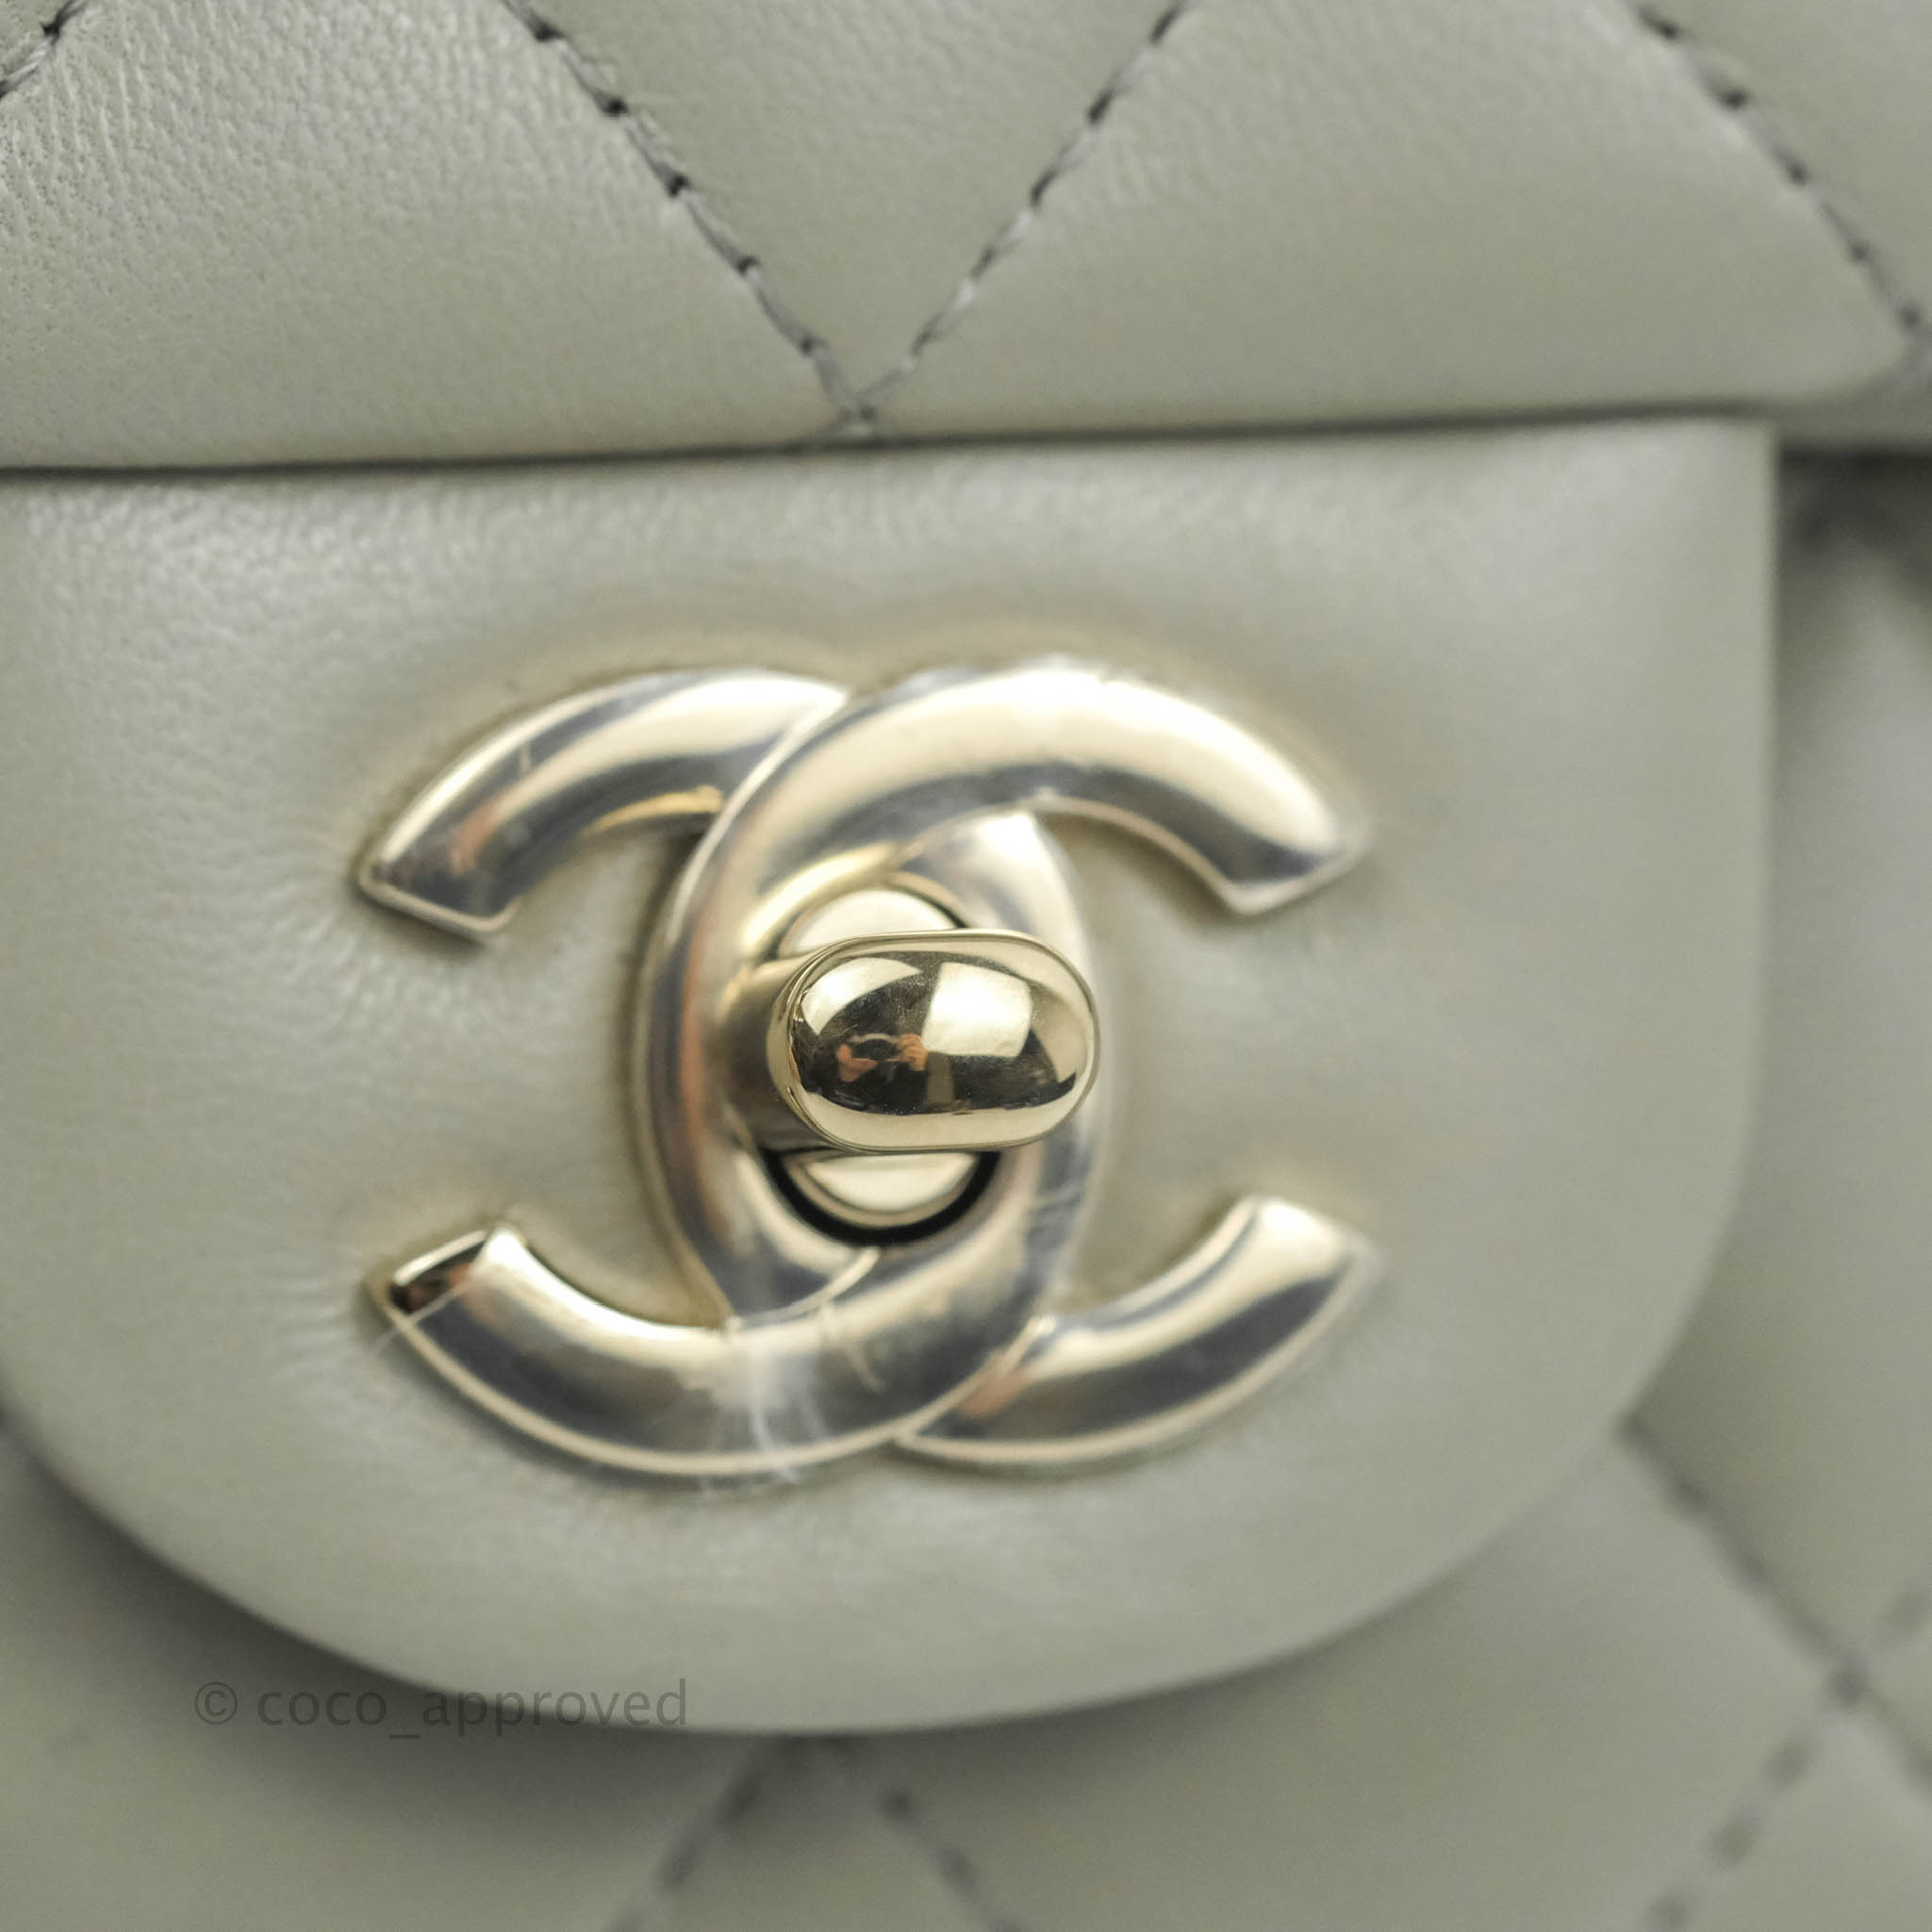 Chanel Quilted Mini Rectangular Flap Light Grey Lambskin Gold